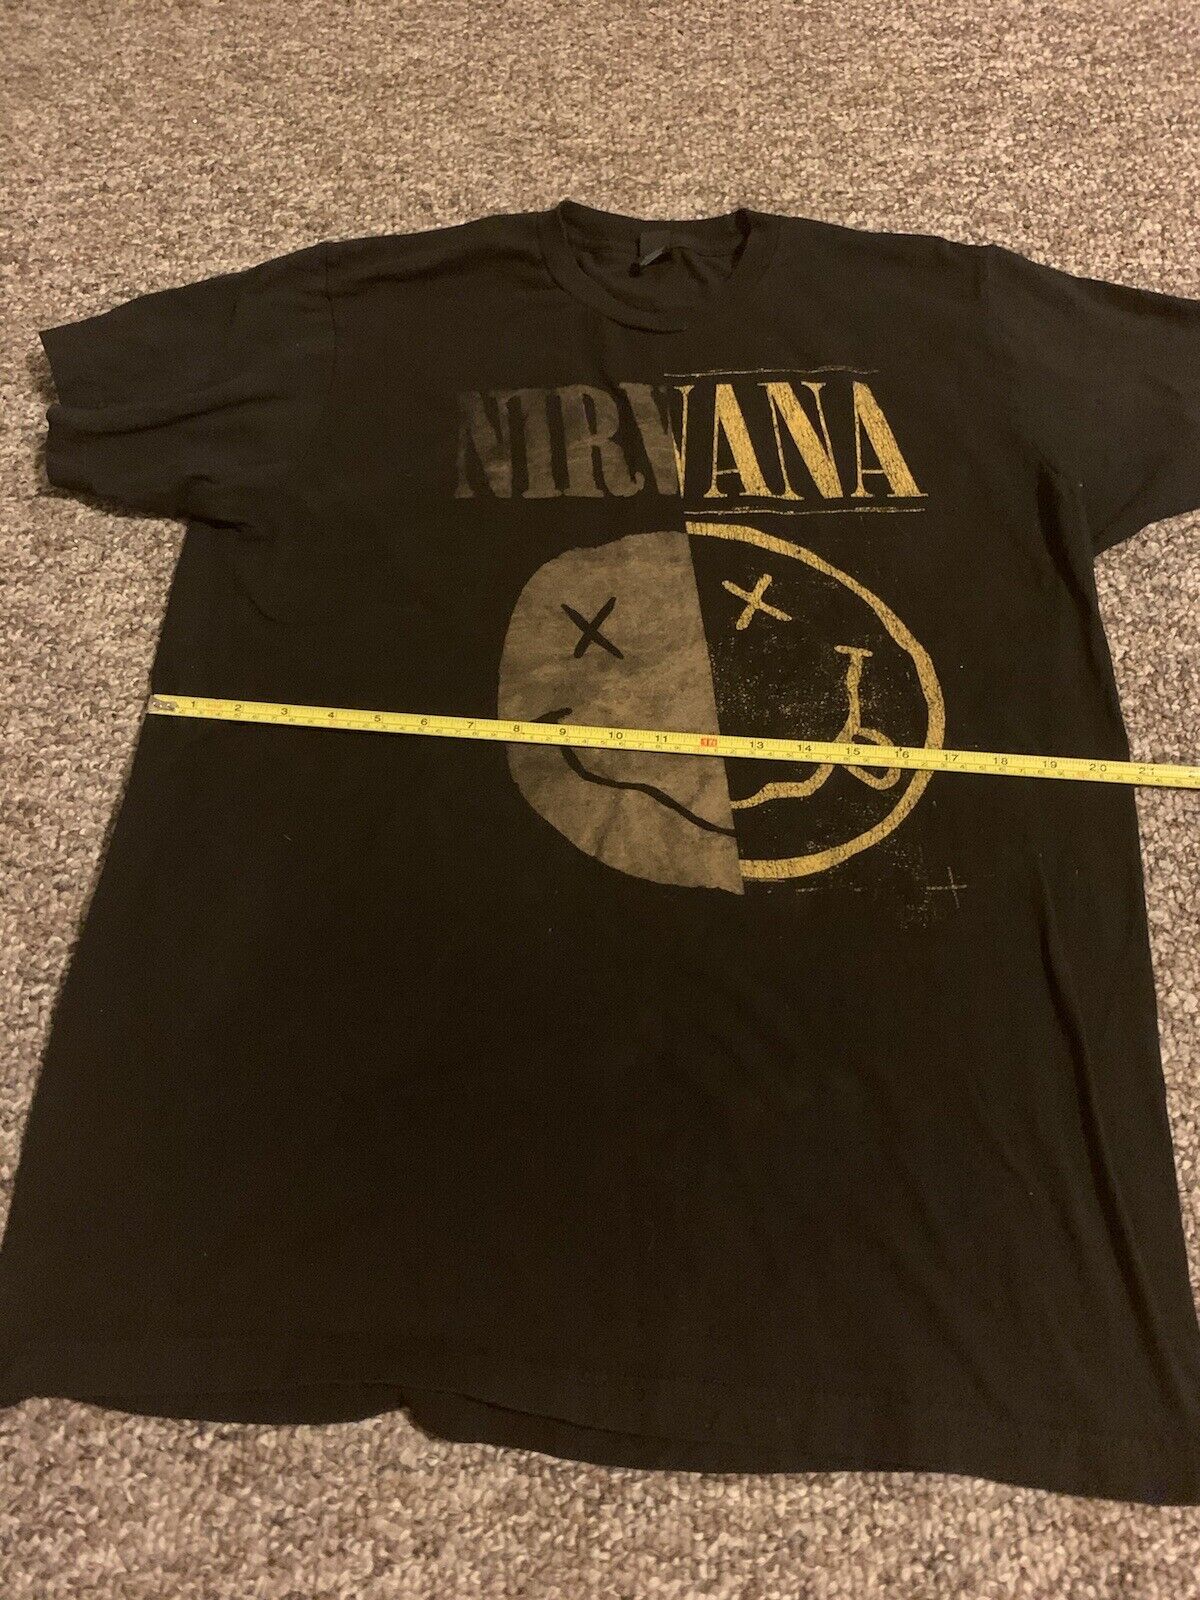 Nirvana Shirt Black Color Size Large Tultex Tag L - image 8